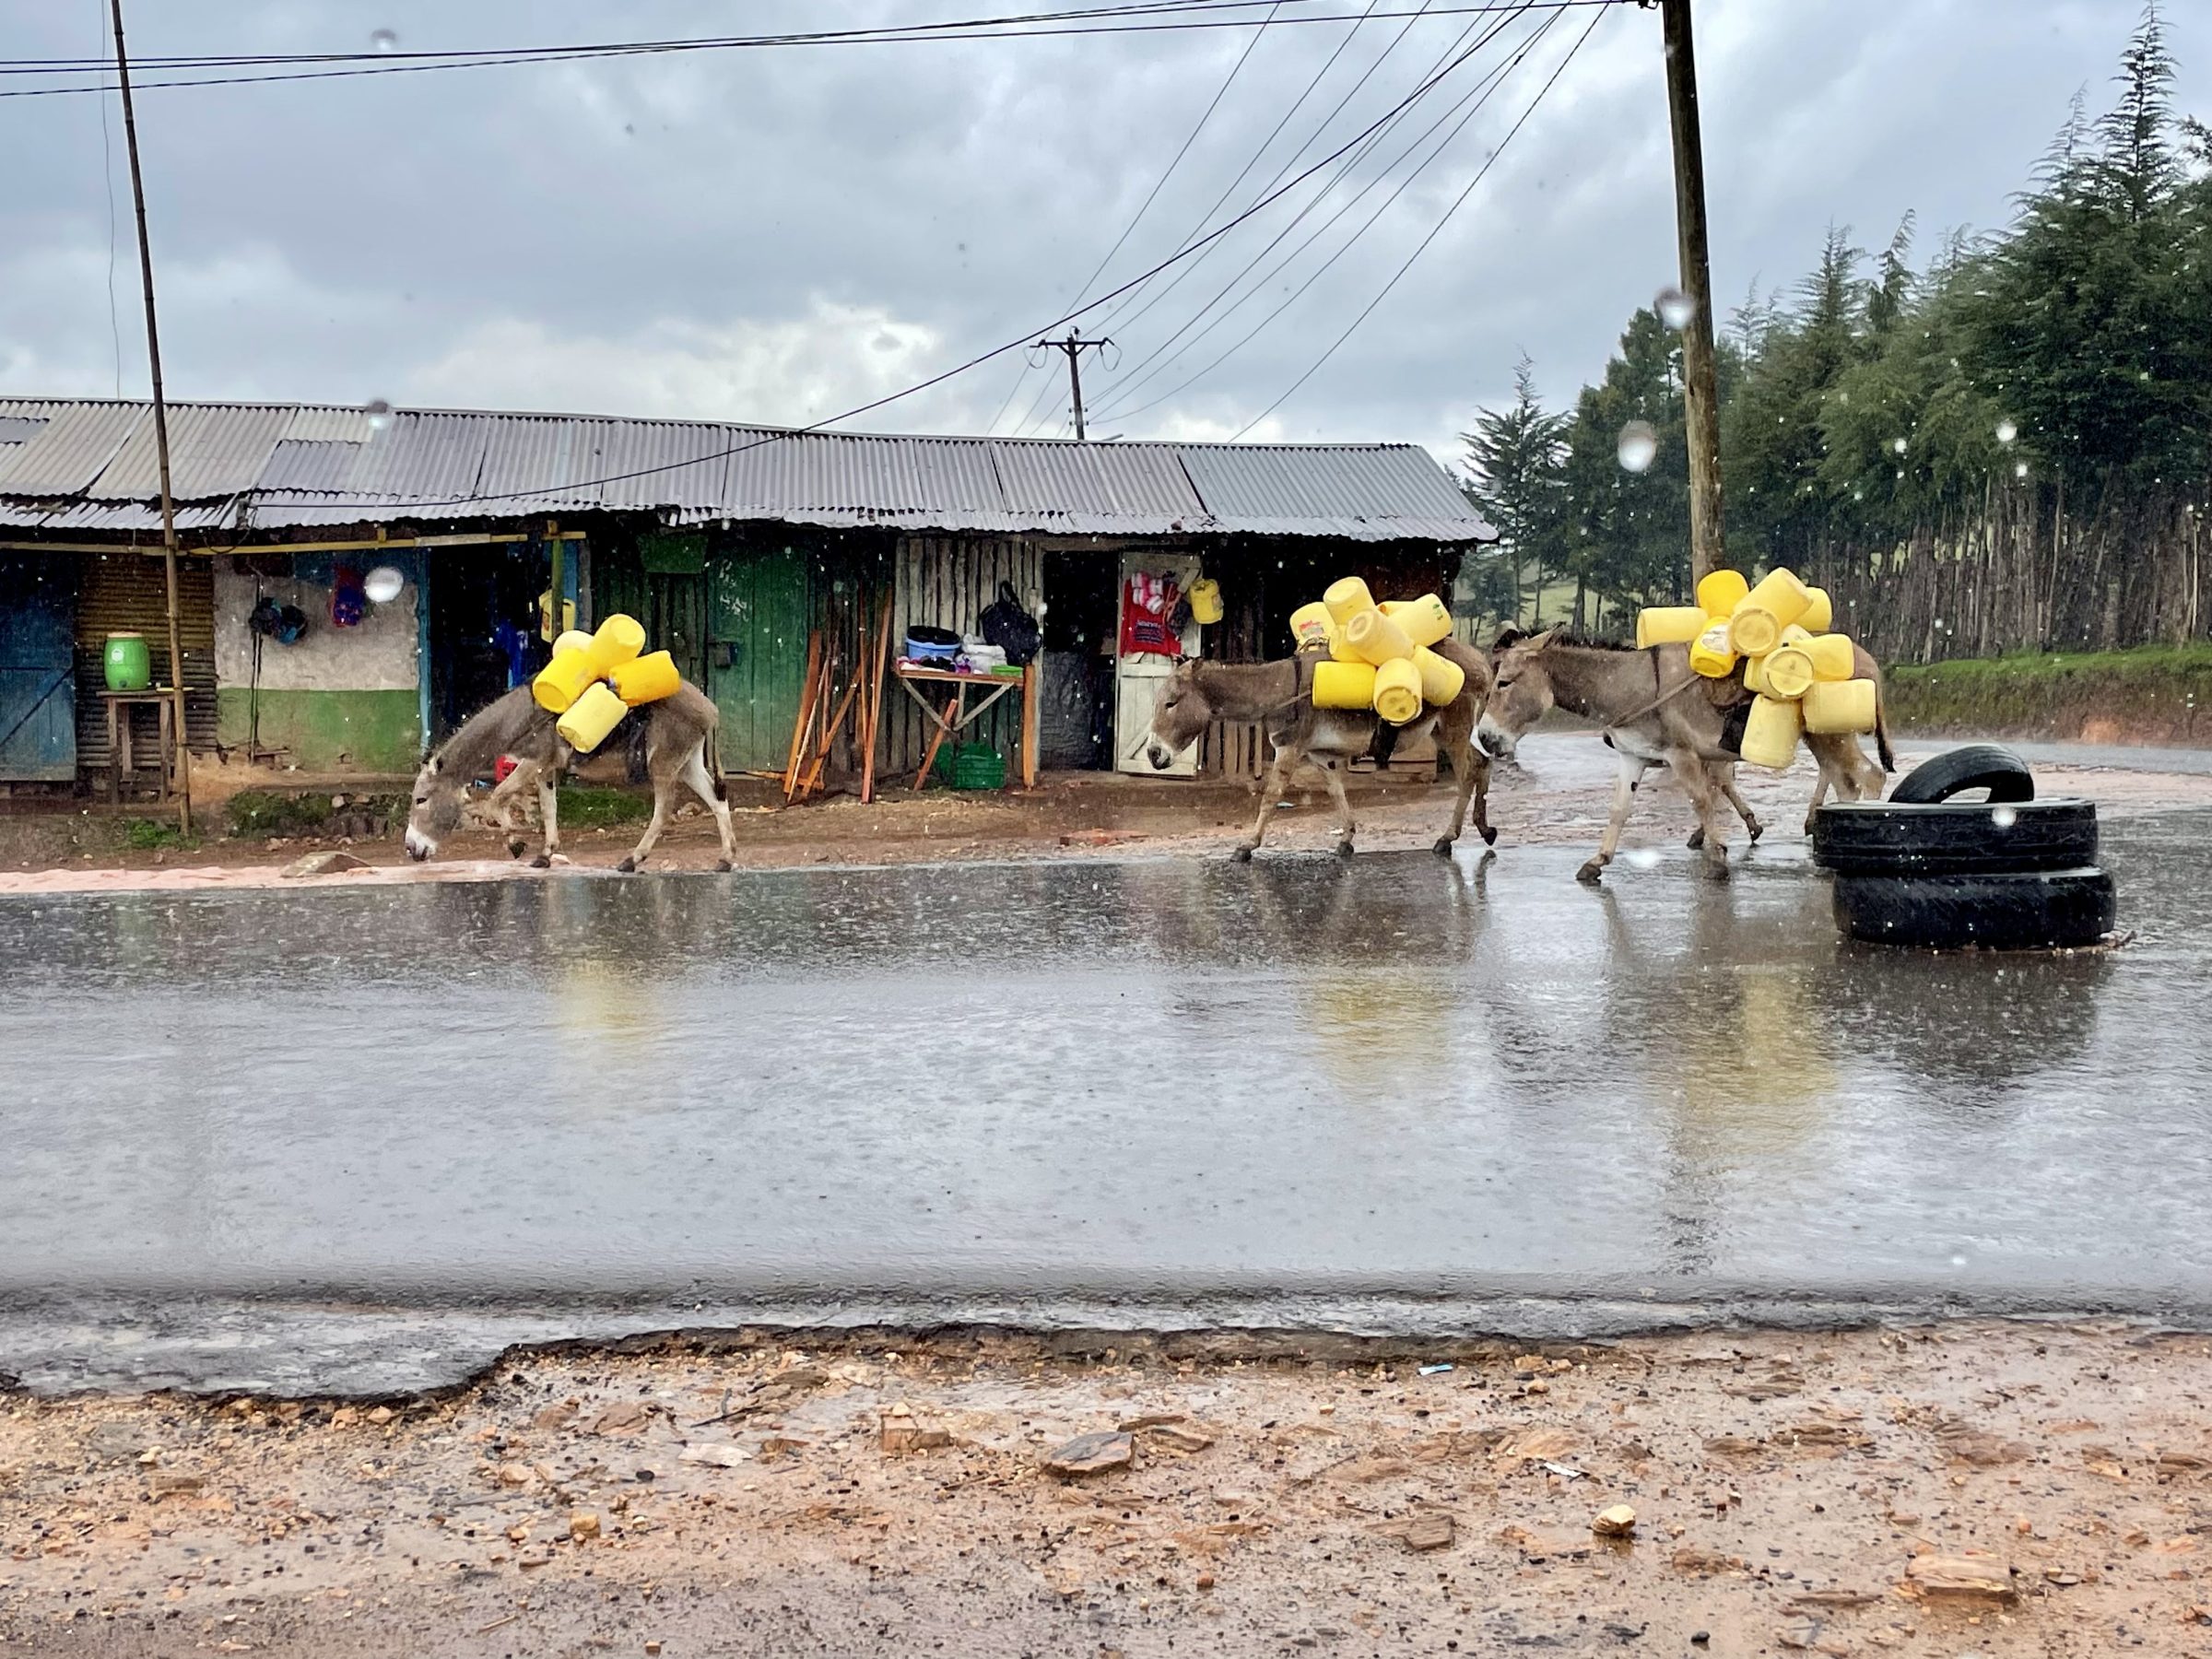 Donkeys don't mind the rain